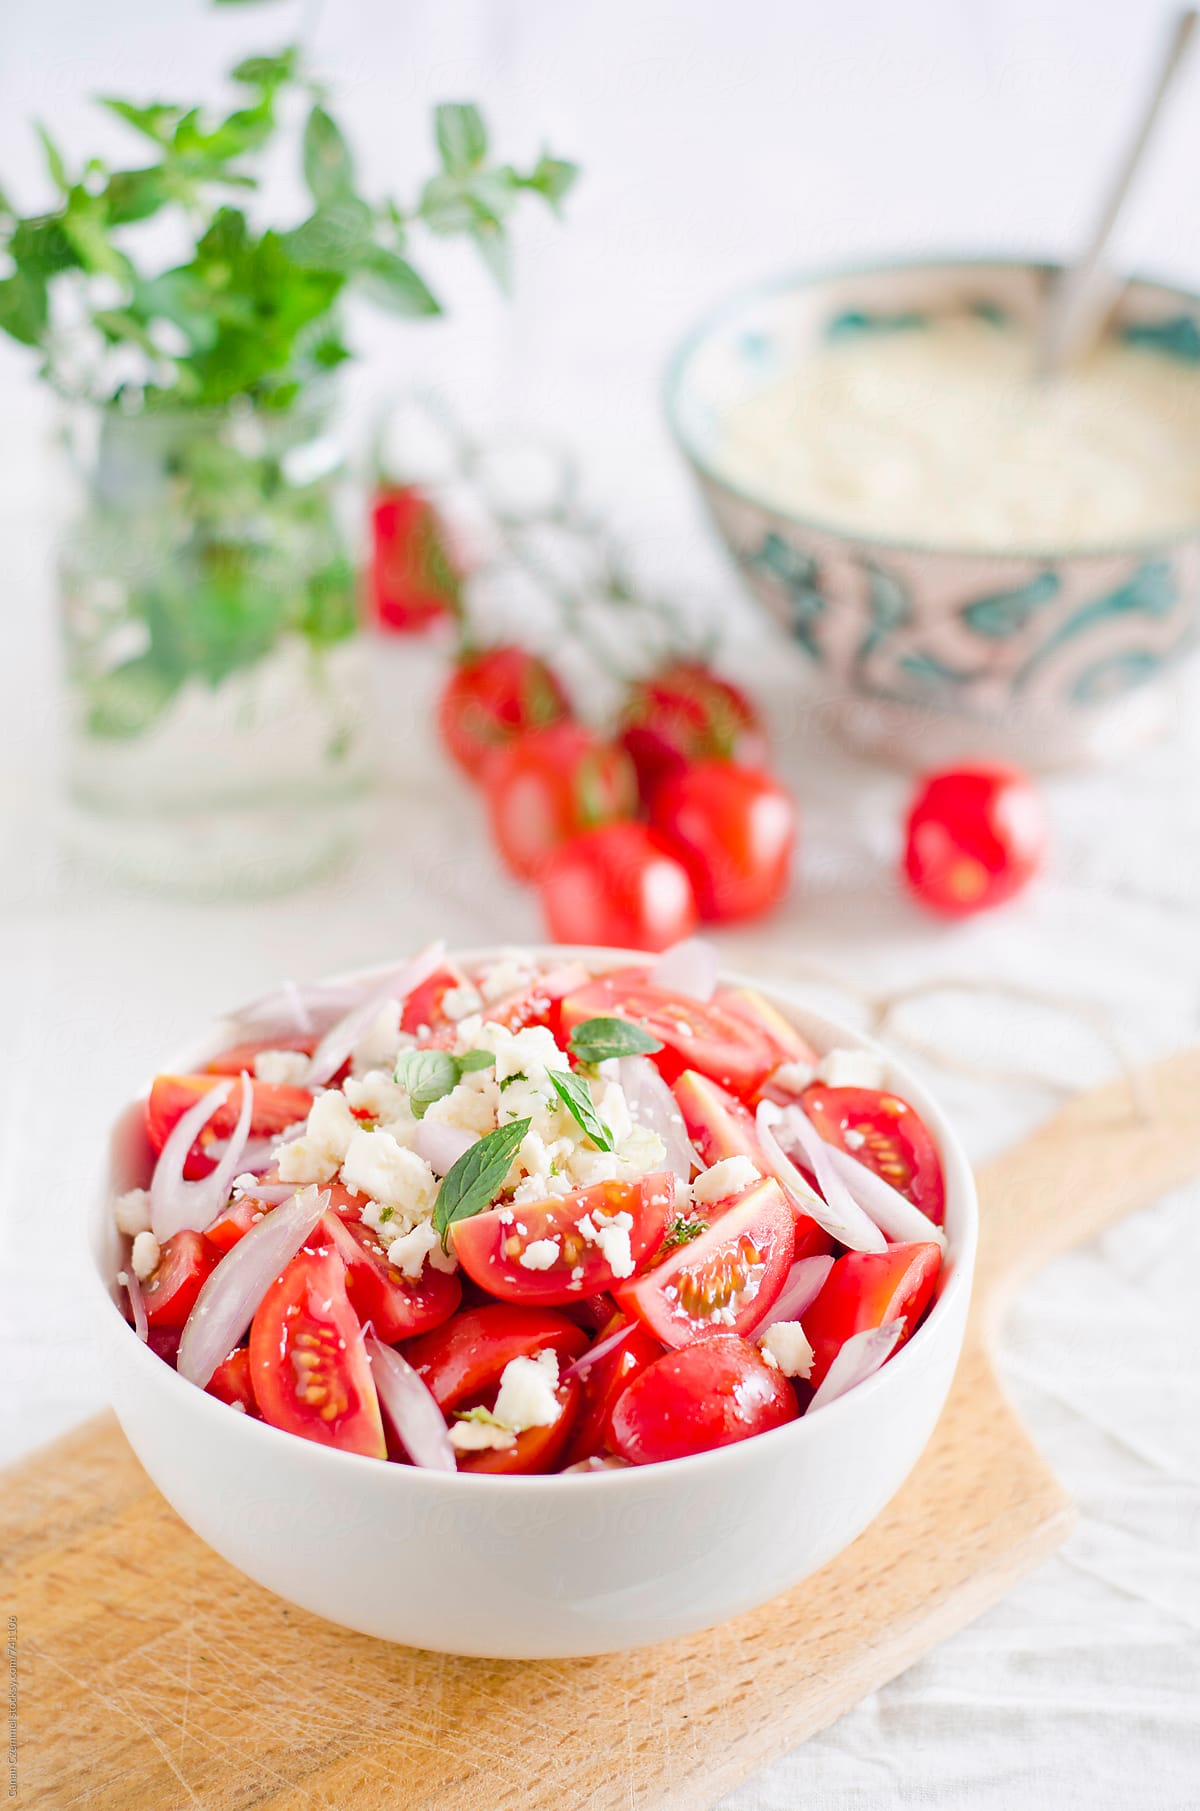 starters: turkish alp soup and tomato salad